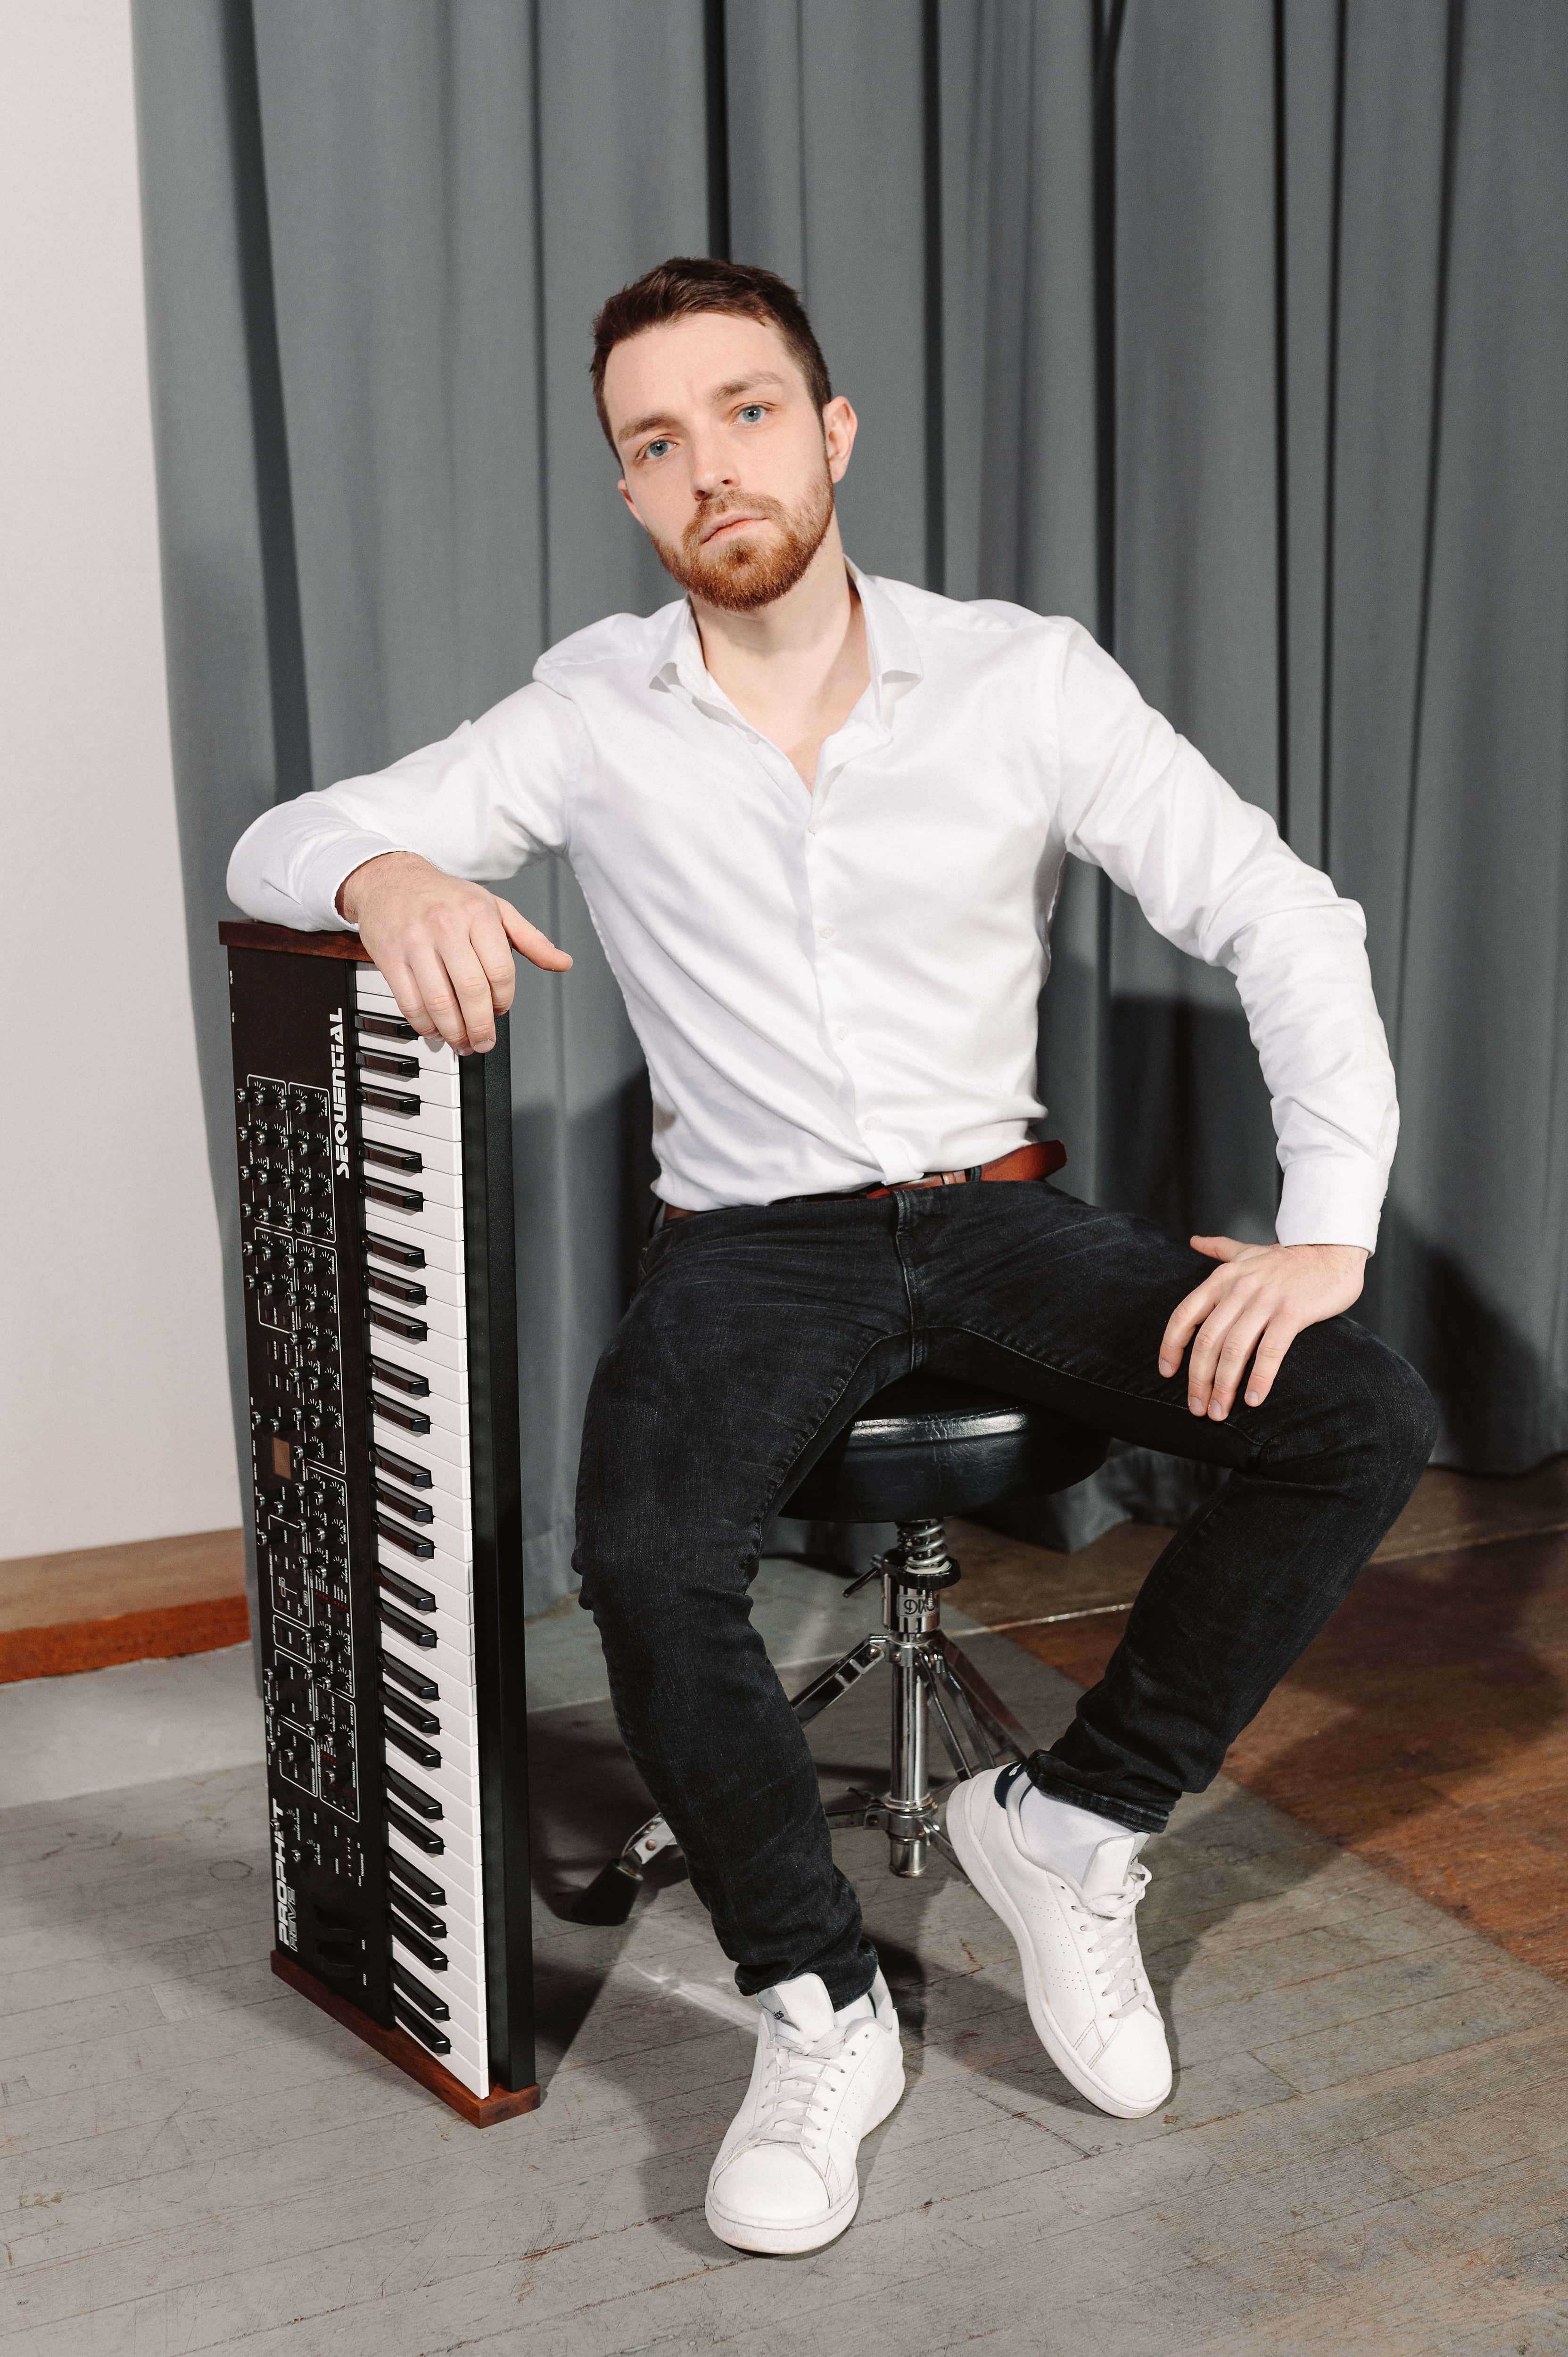 David Obremski, Keyboards